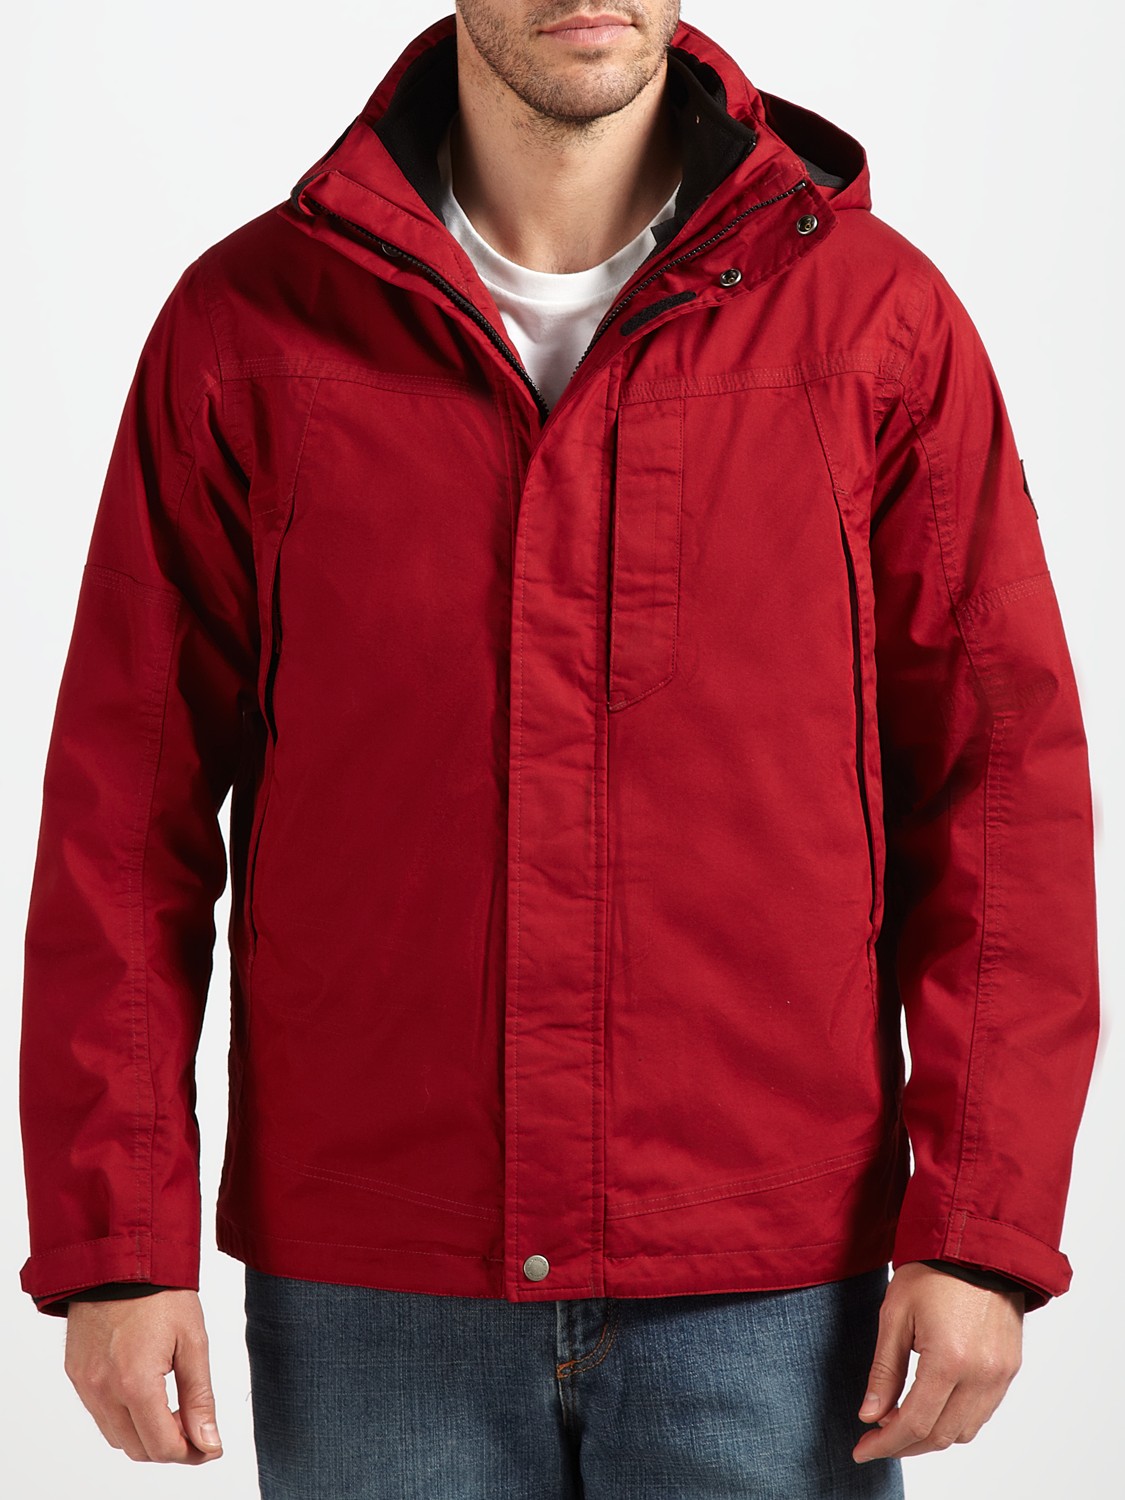 Timberland Waterproof Jacket Mens Outlet, 56% OFF | www.colegiogamarra.com